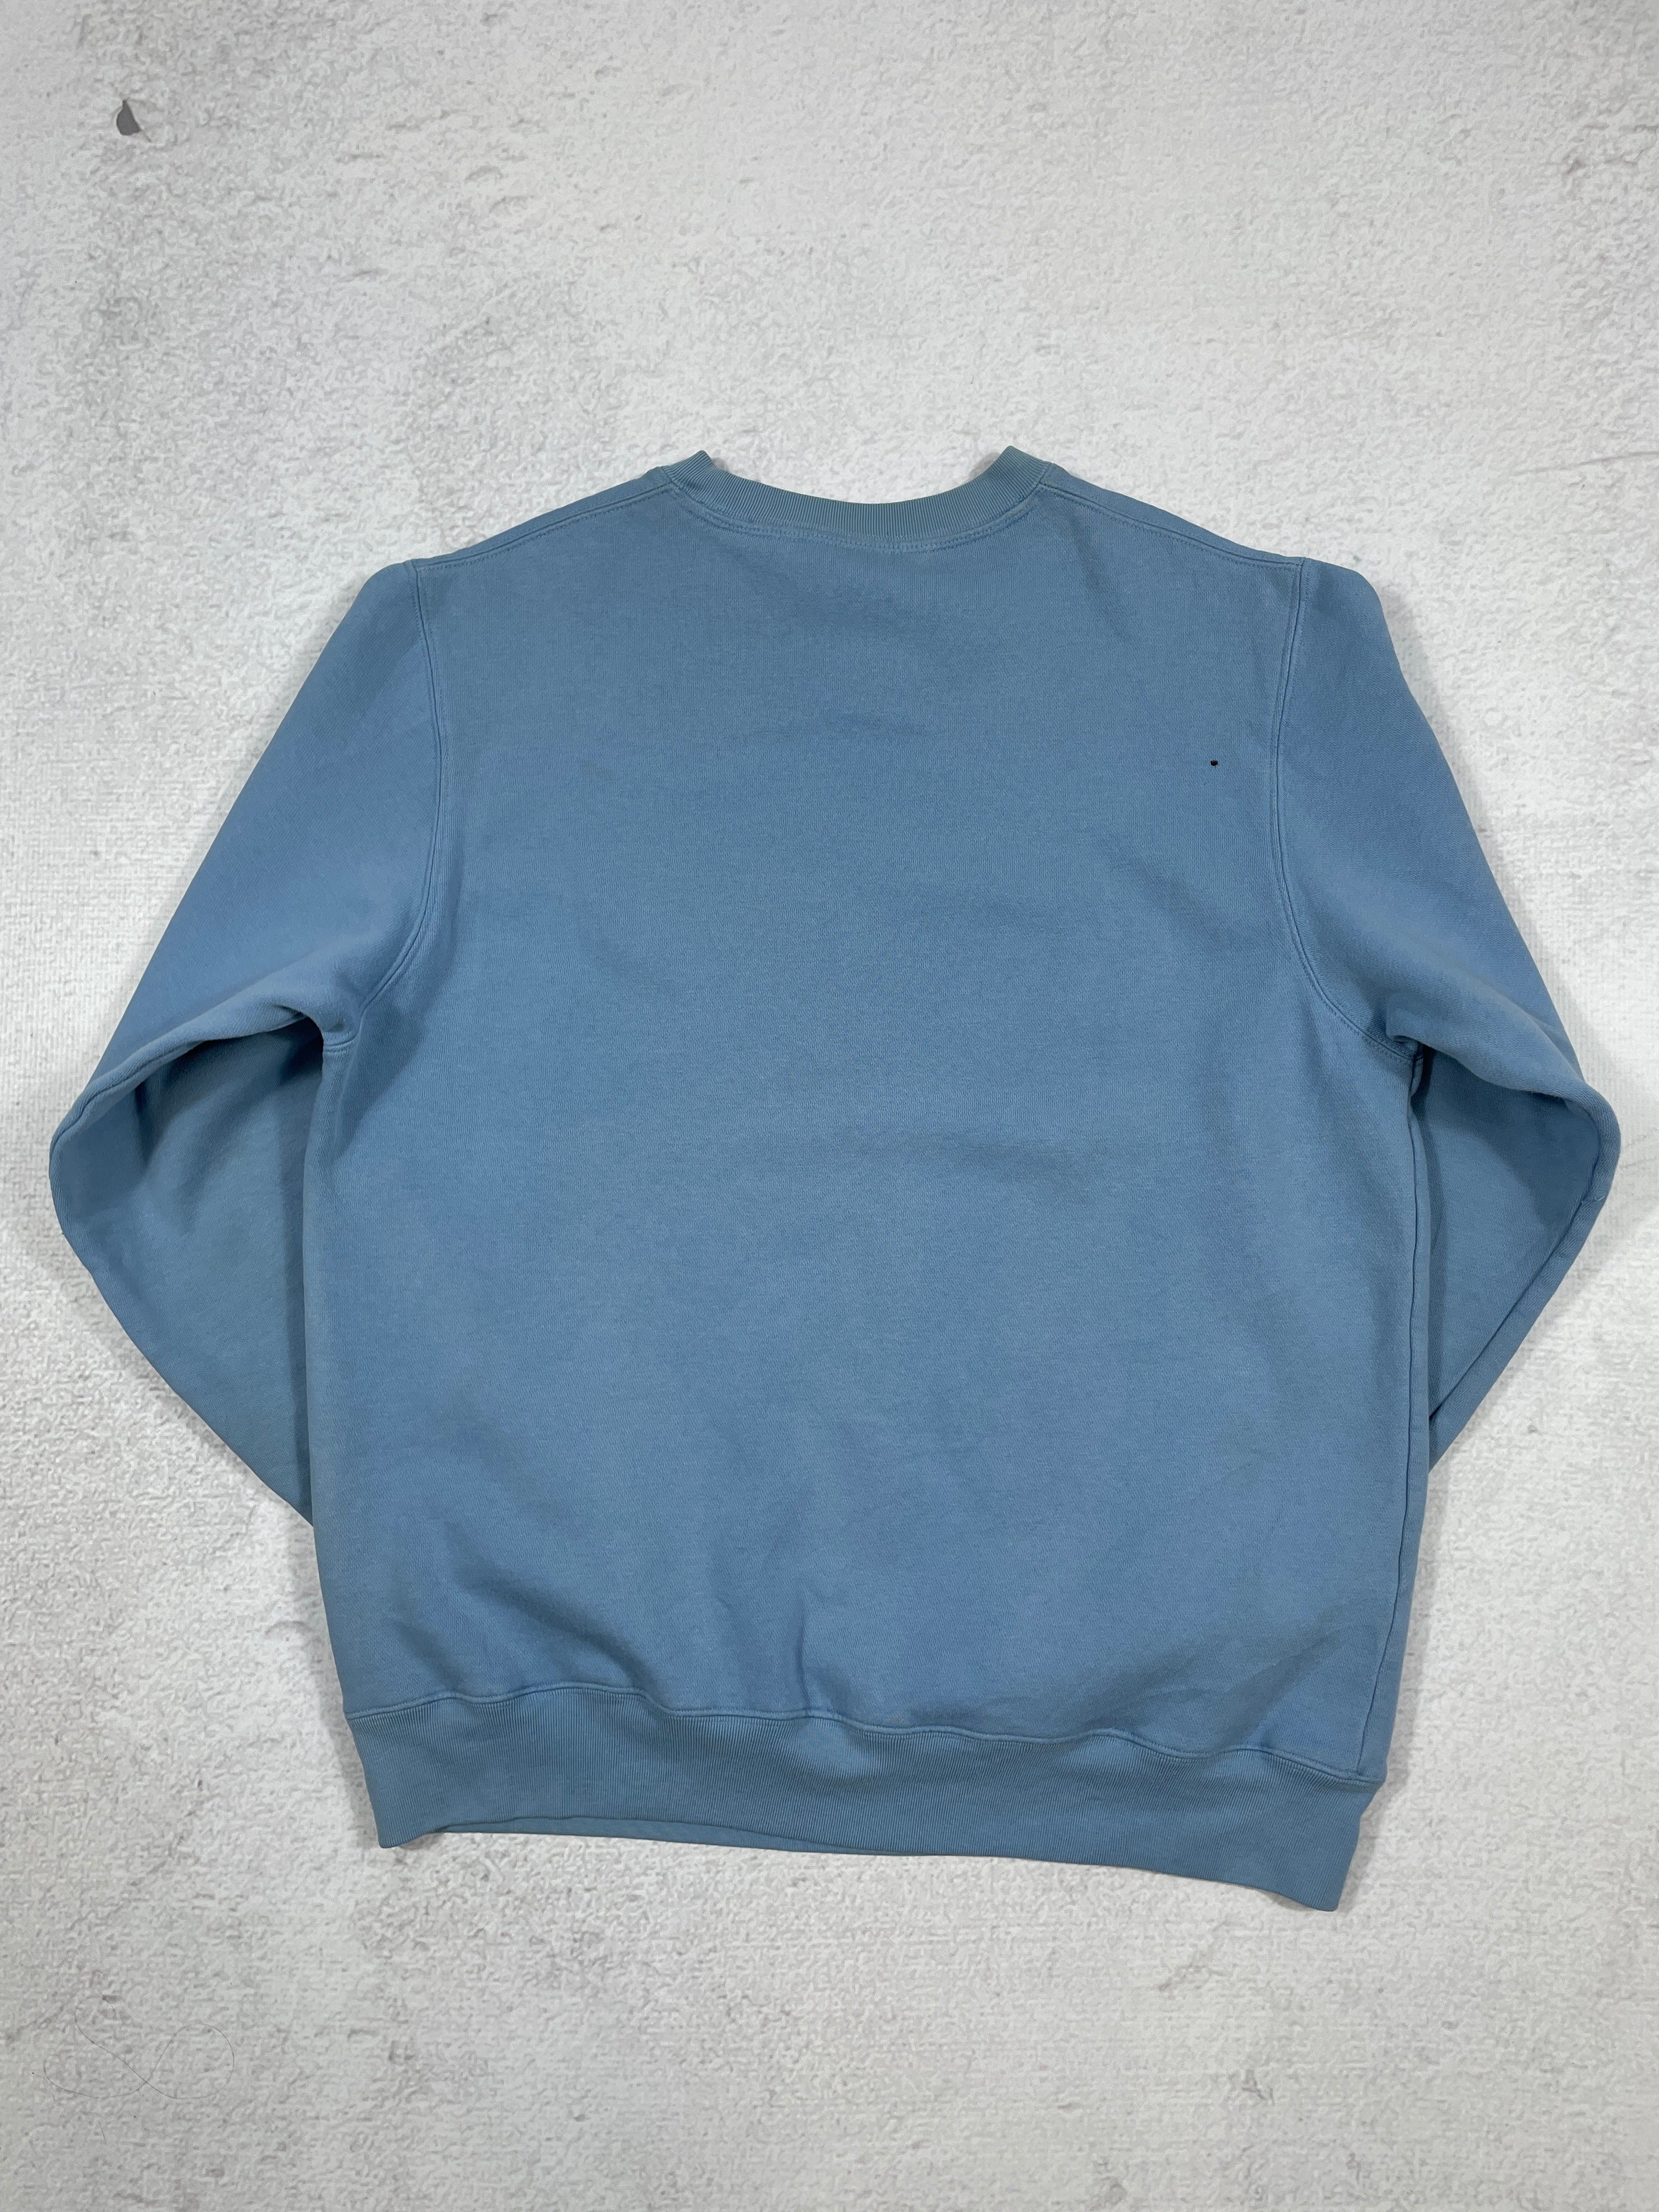 Vintage Nautica Crewneck Sweatshirt - Men's Medium